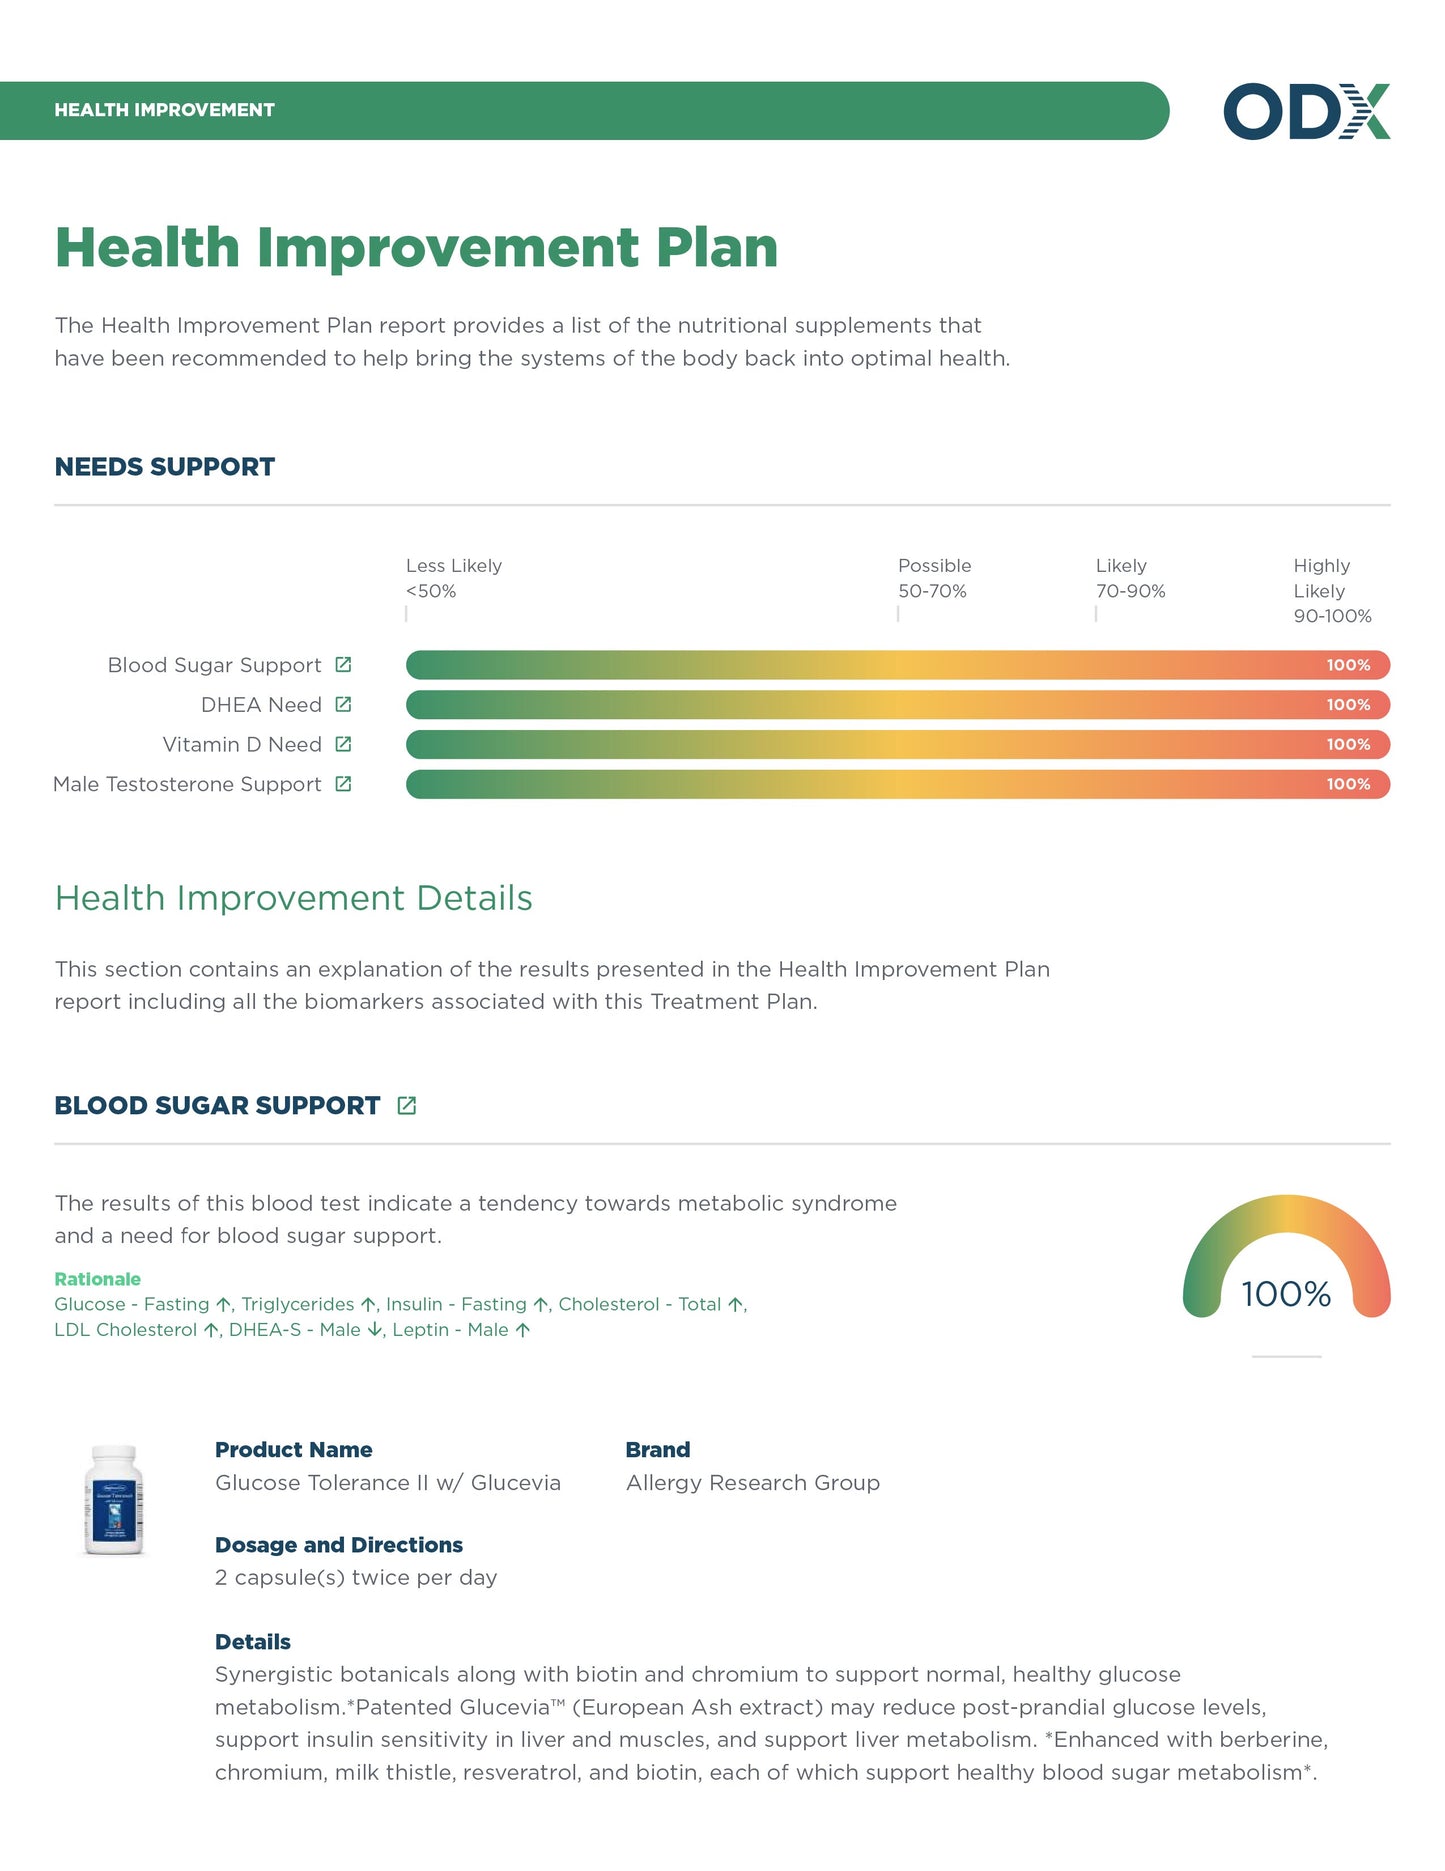 Optimal DX Functional Health Report